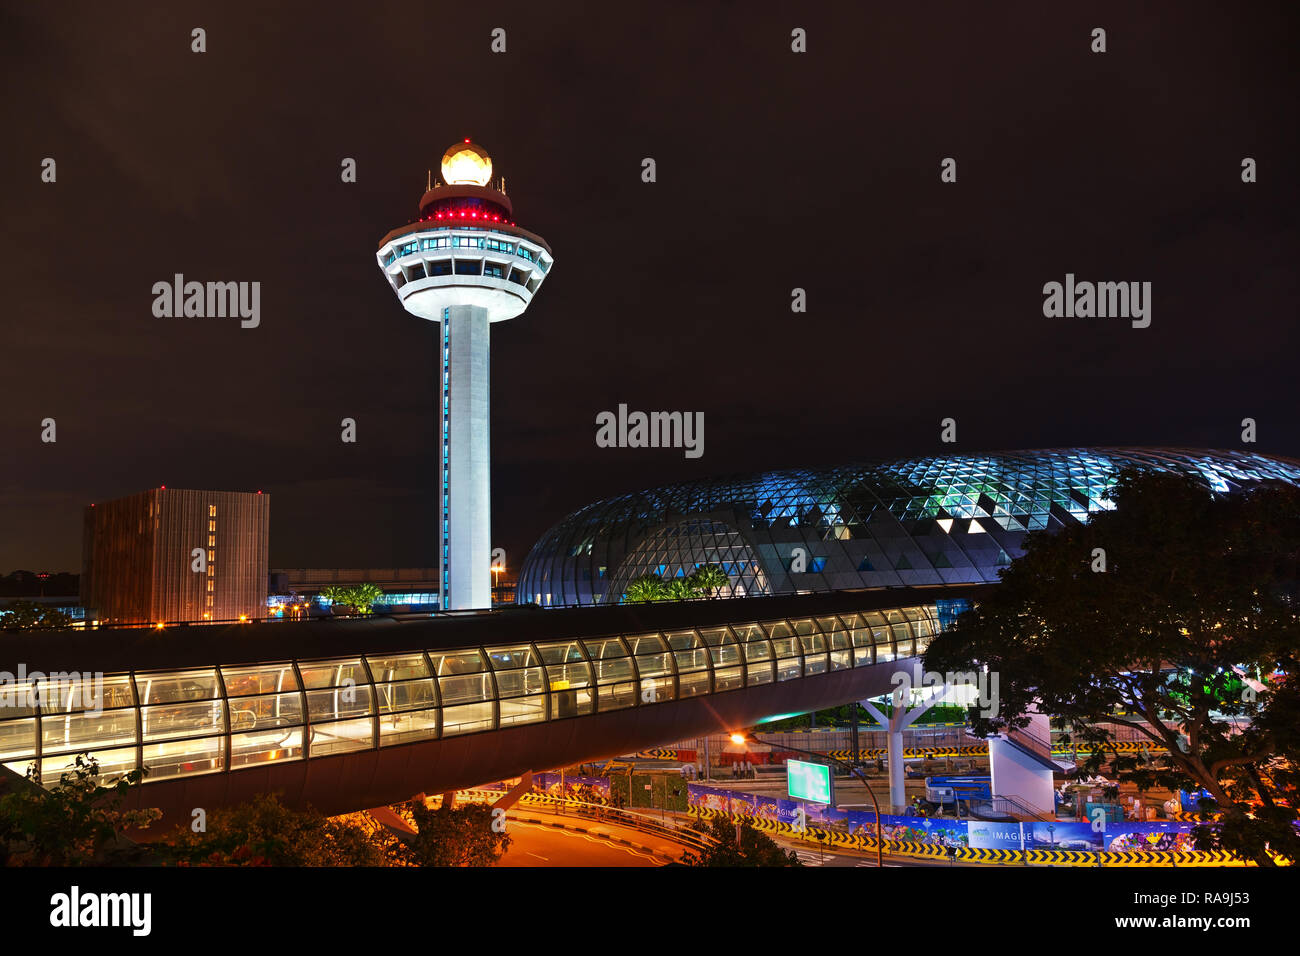 SINGAPORE - NOVEMBER 02: Changi airport control tower at night on November 02, 2018 in Singapore. Stock Photo